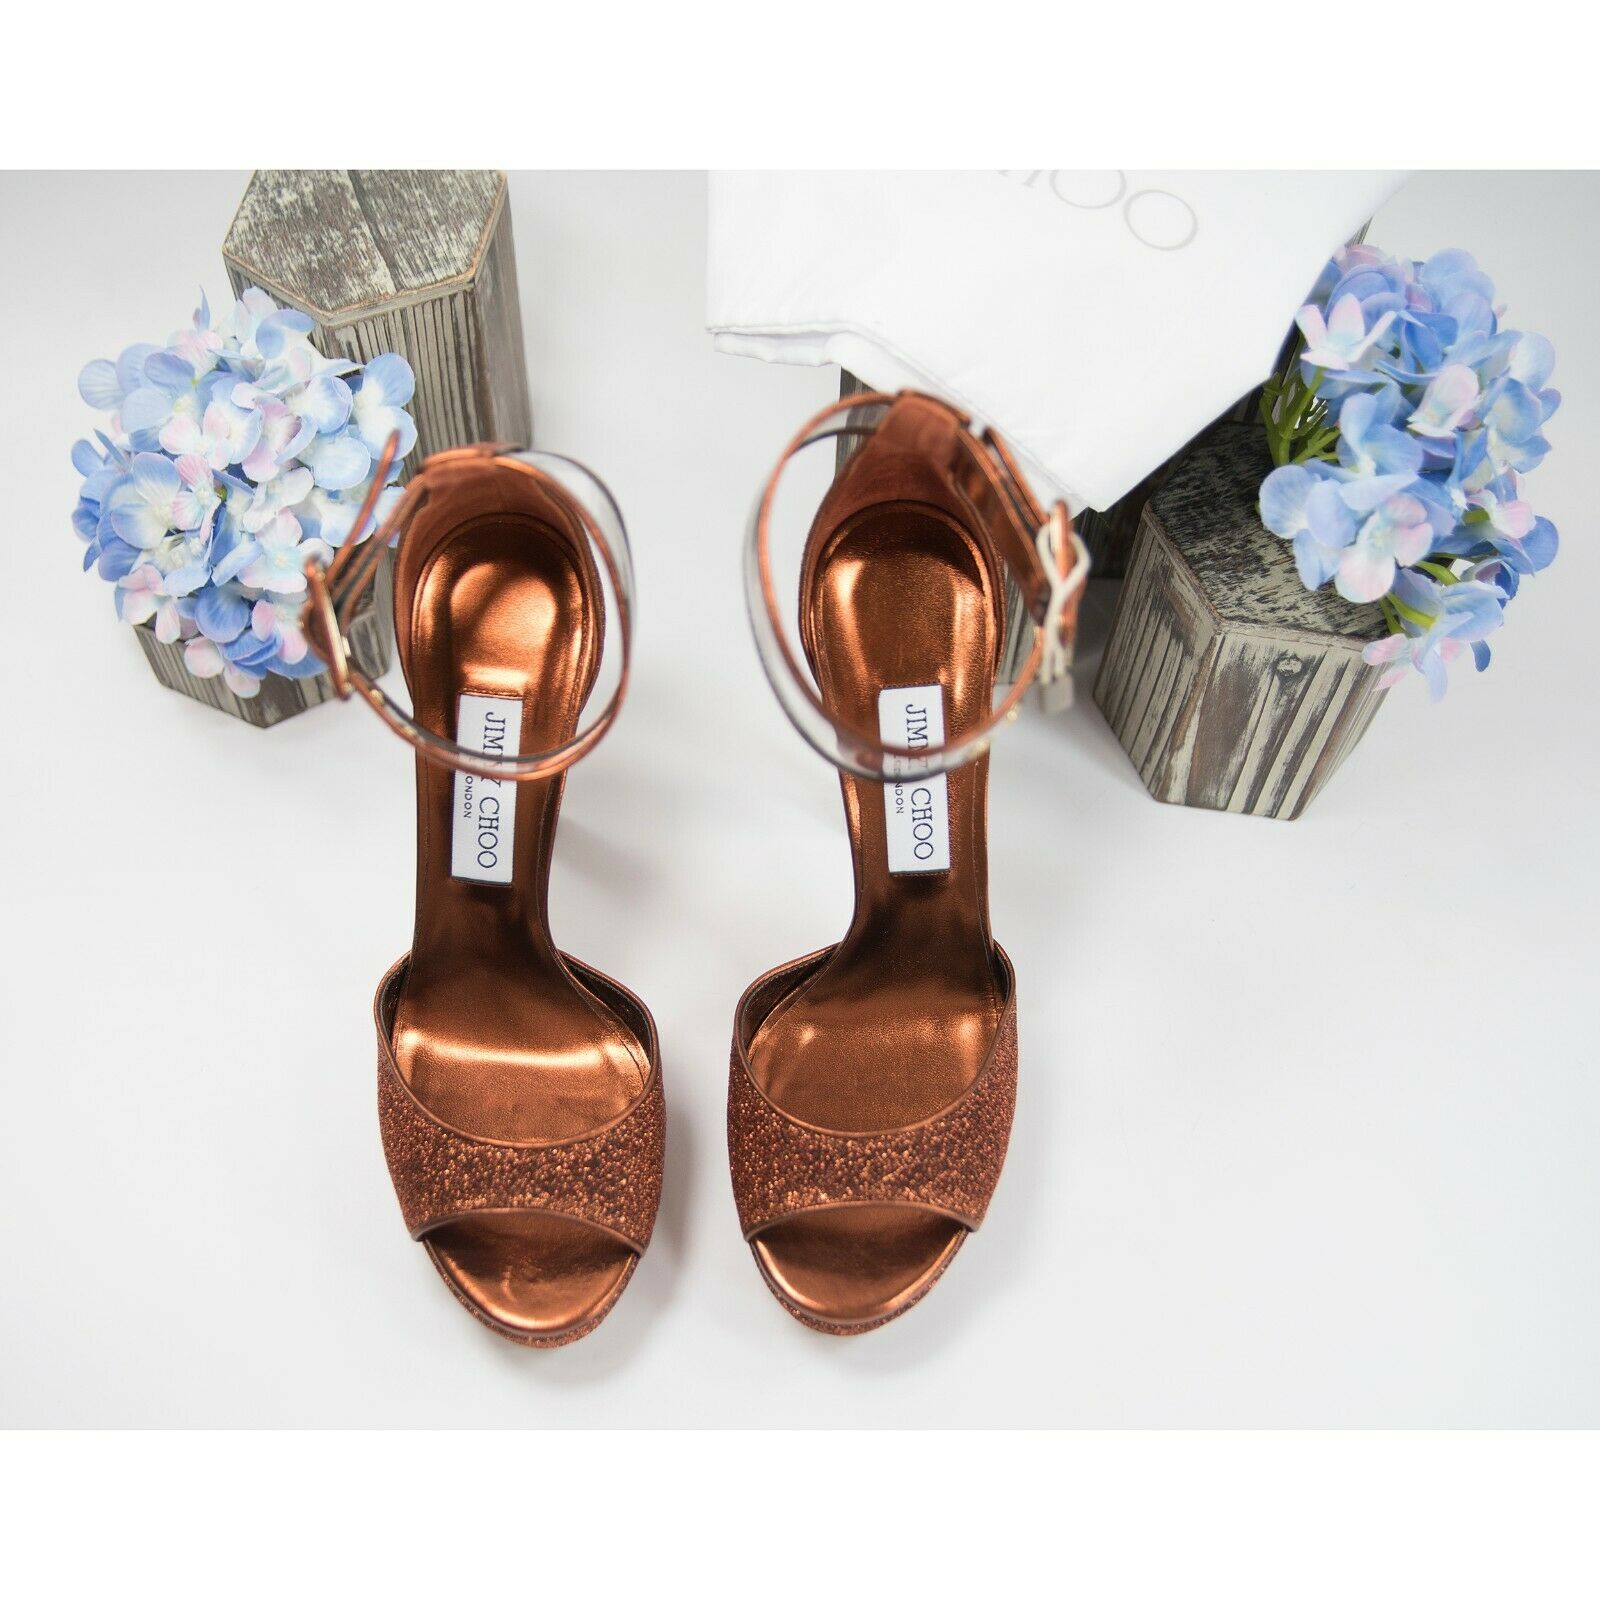 Copper 20 cm FLAMINGO-810LG glitter platform high heels shoes